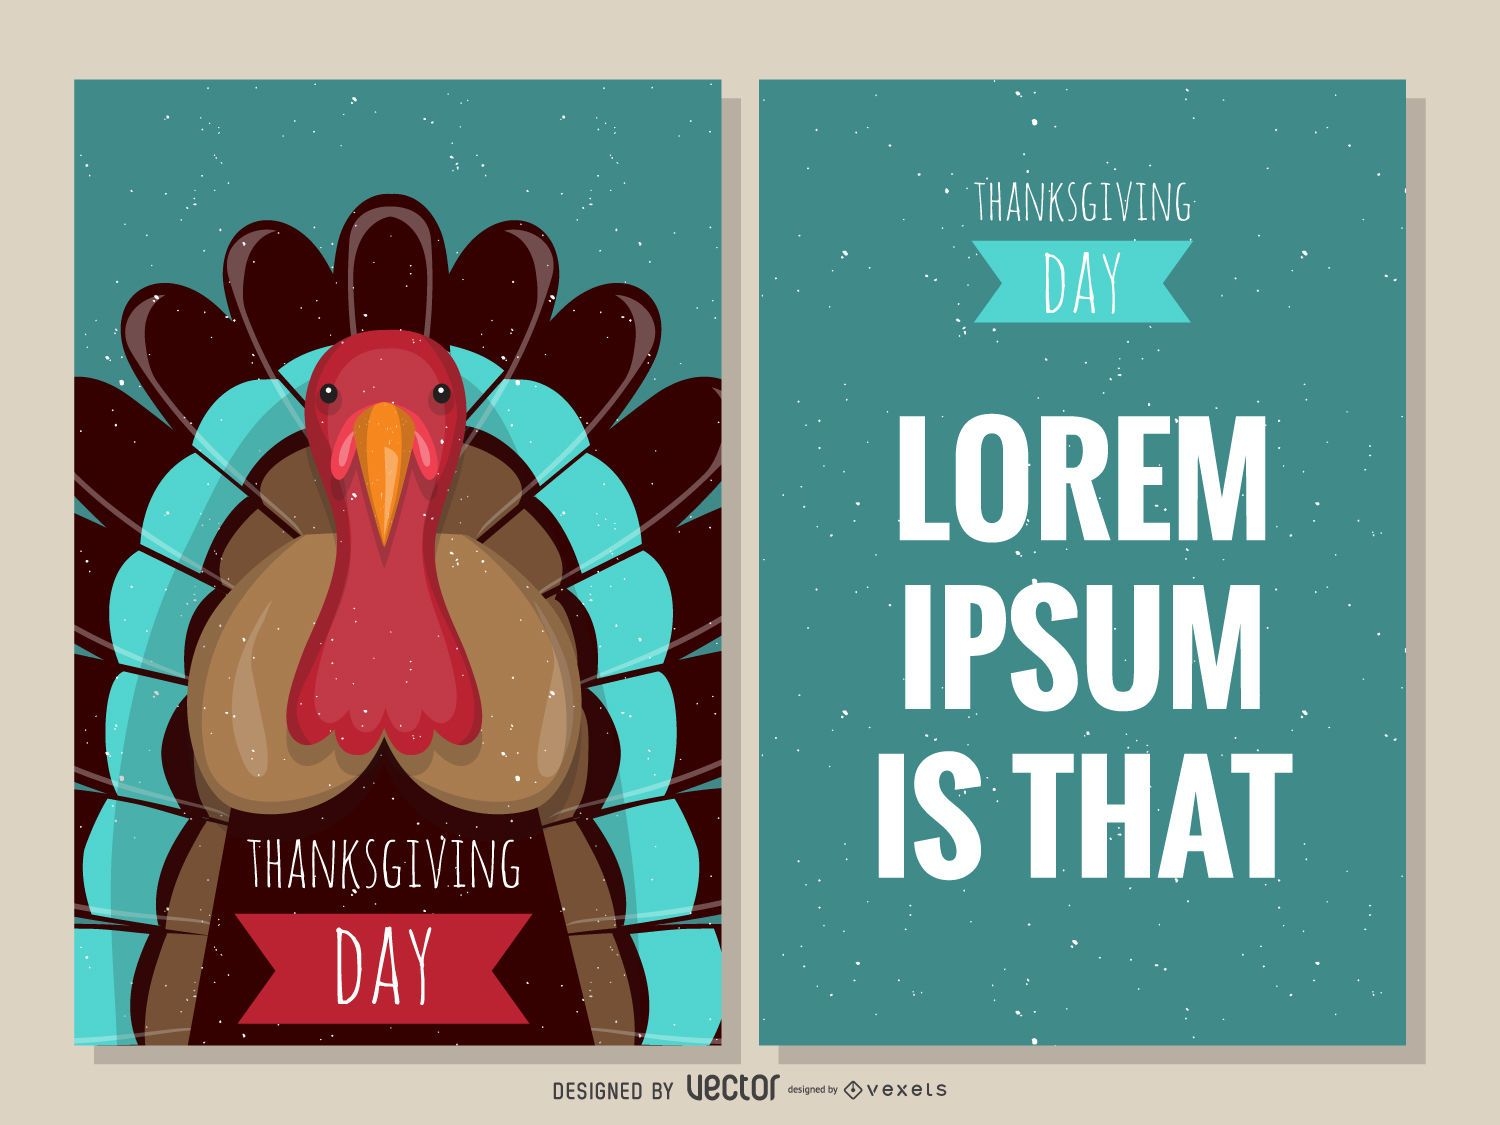 Thanksgiving turkey card